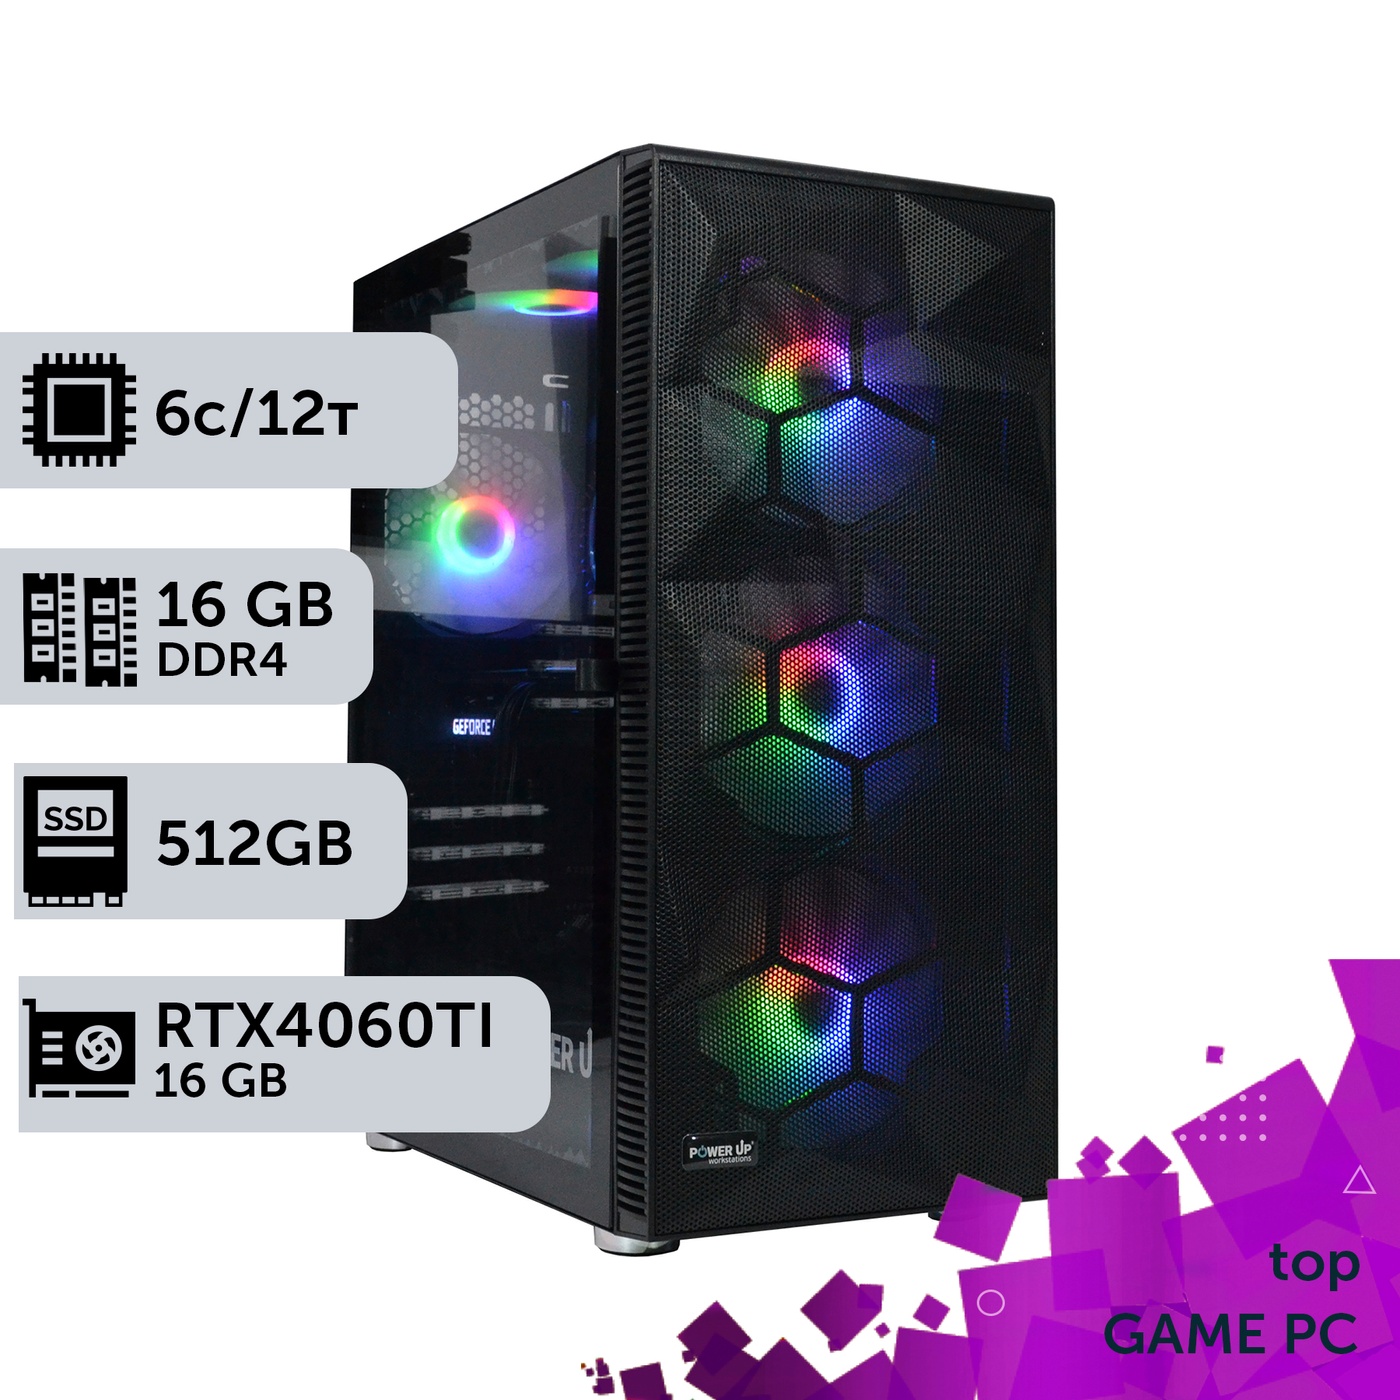 Игровой компьютер GamePC TOP #317 Core i5 10400F/16 GB/SSD 512GB/GeForce RTX 4060Ti 16GB